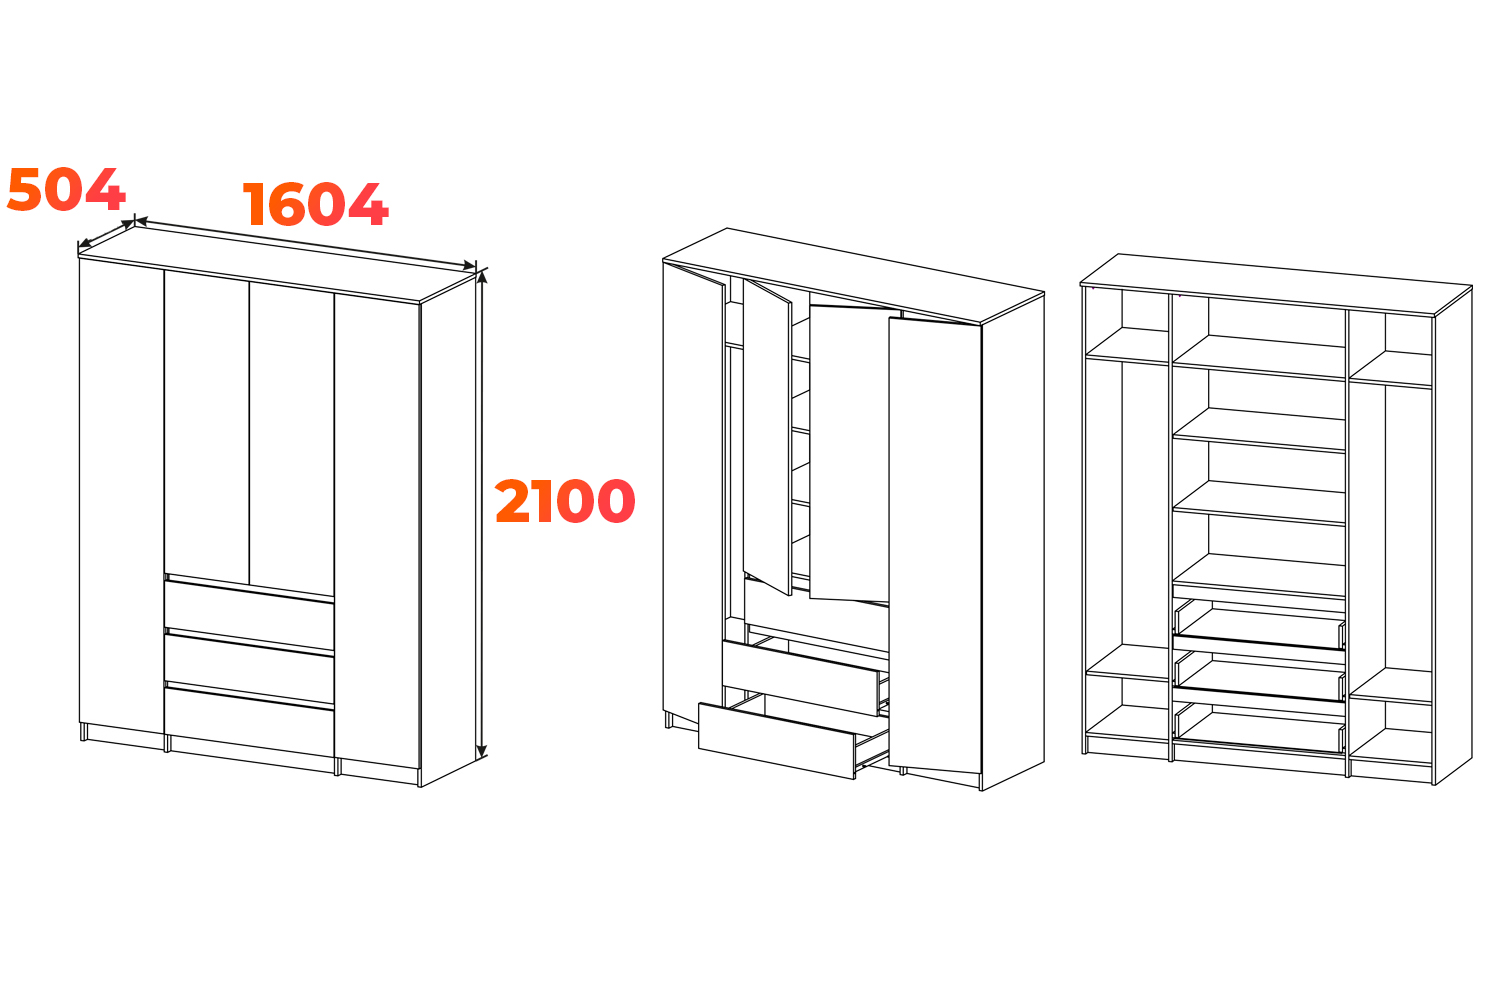 Схема четырёхстворчатого шкафа Мори 1600.1 с размерами